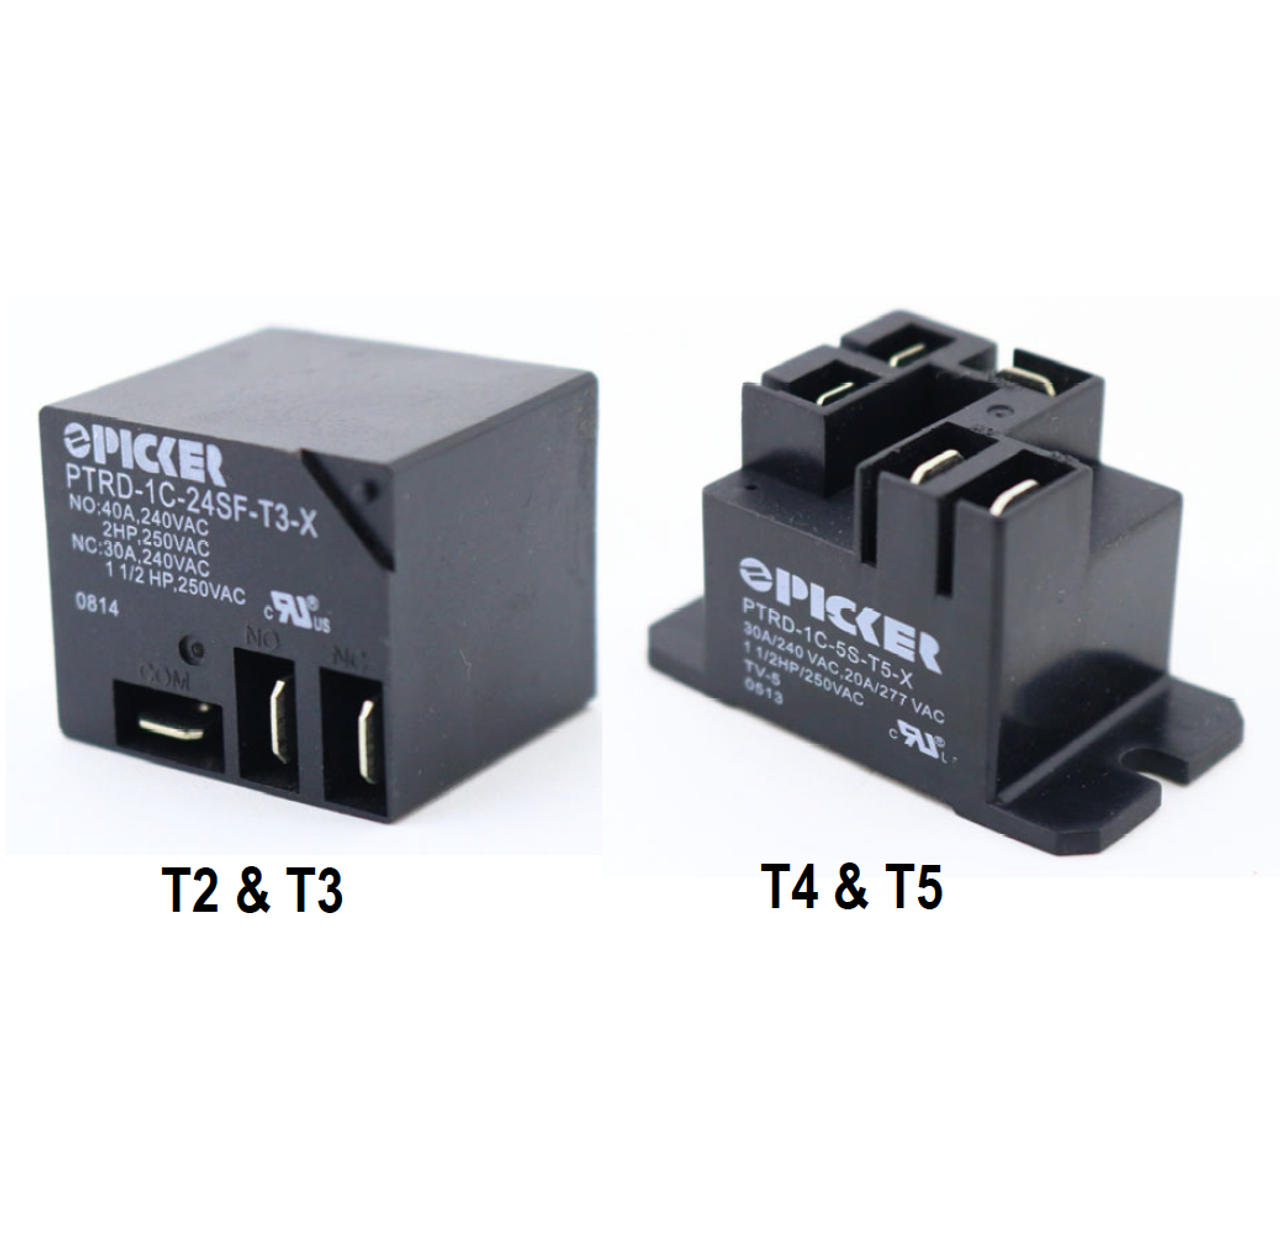 Picker PTRD-1A-24C-T3-X-A0.6G Power Relays